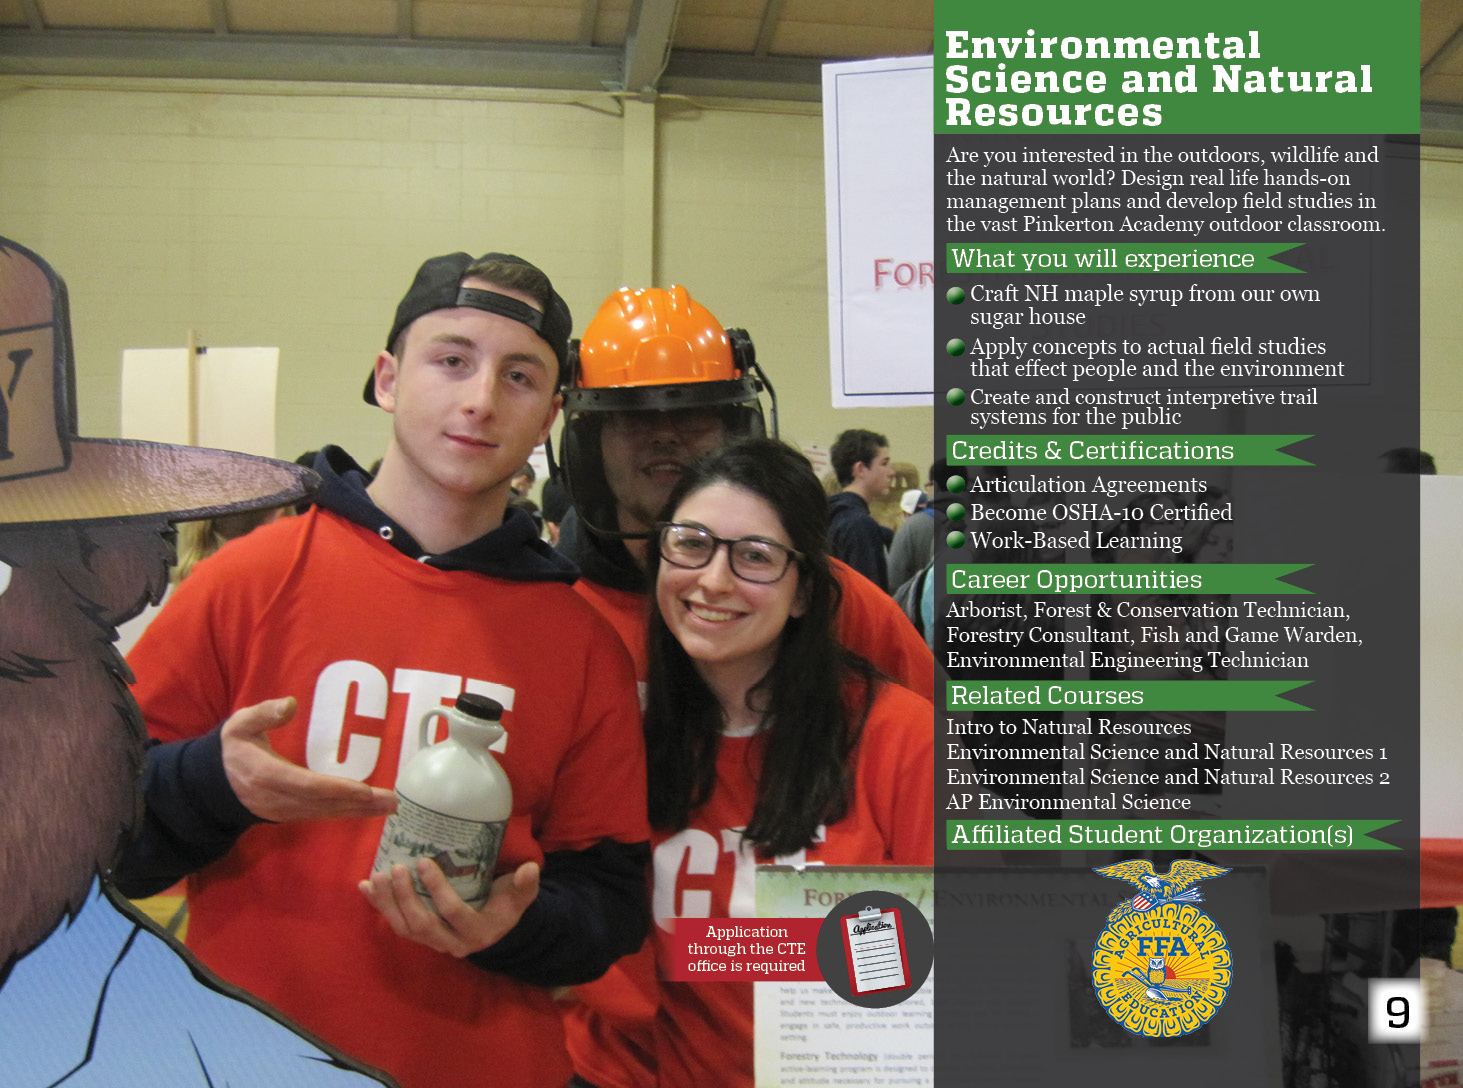 Environmental Science program details